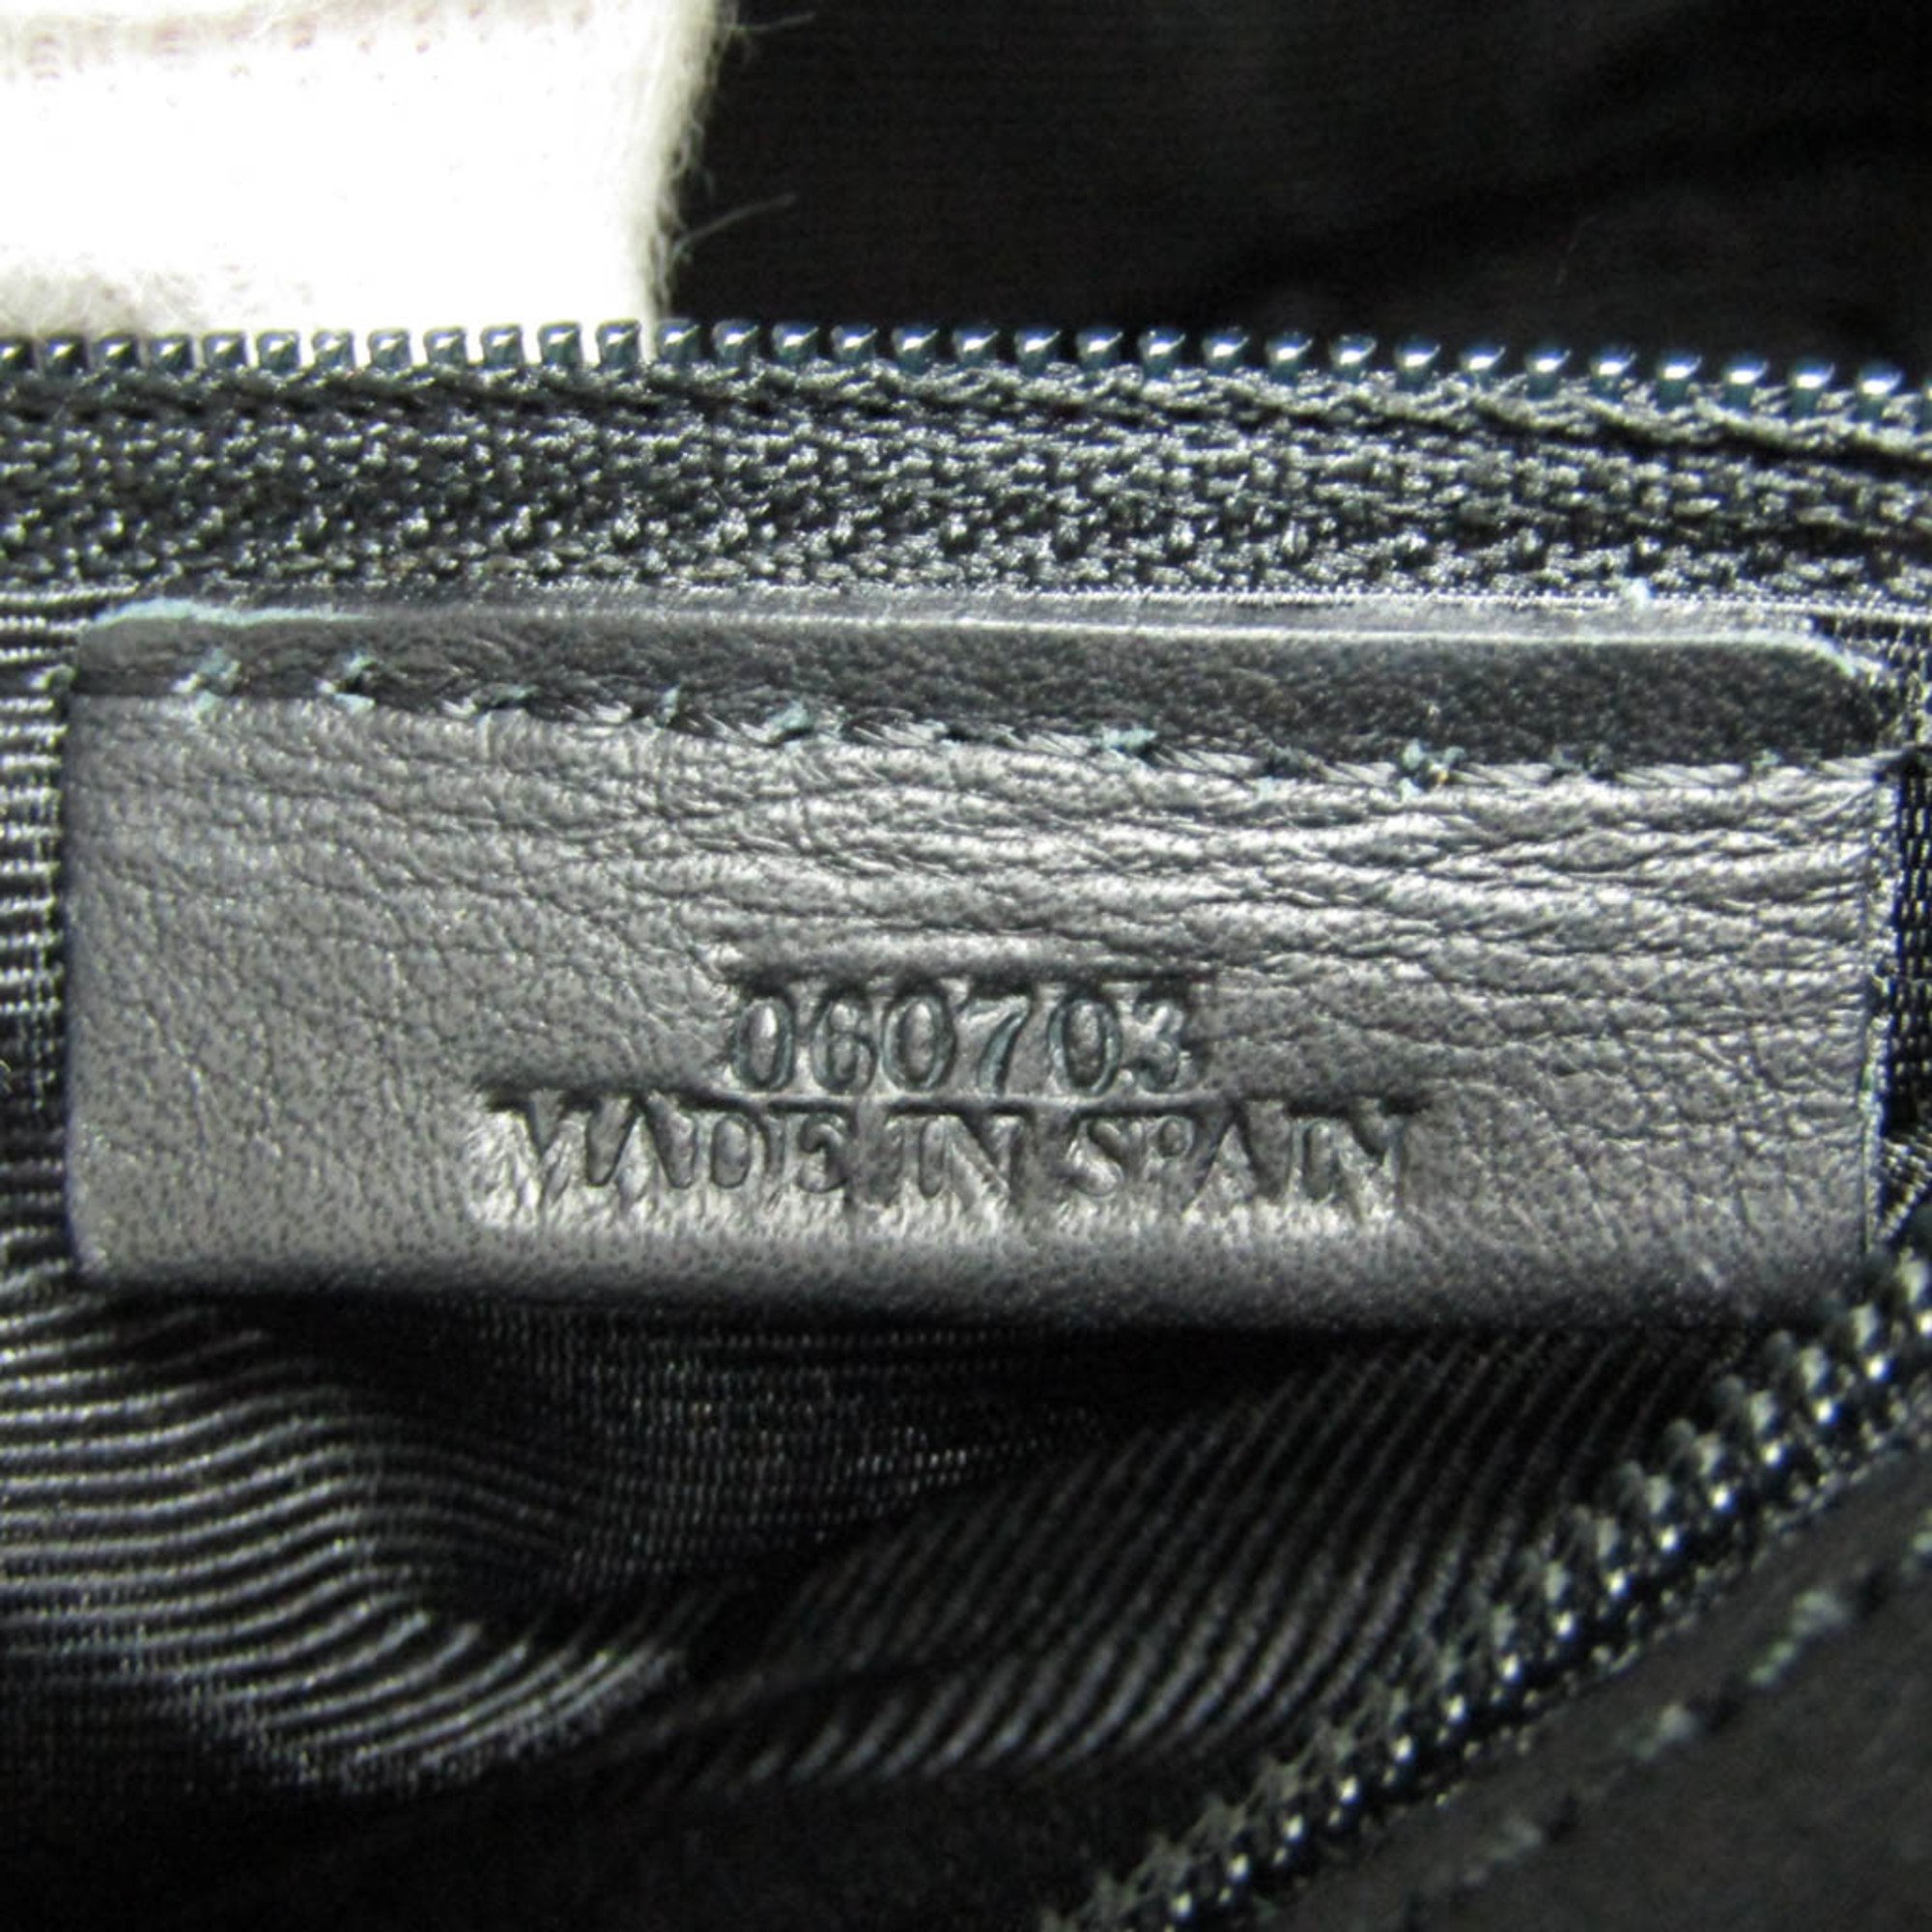 Loewe Anagram Men's Leather Clutch Bag Black